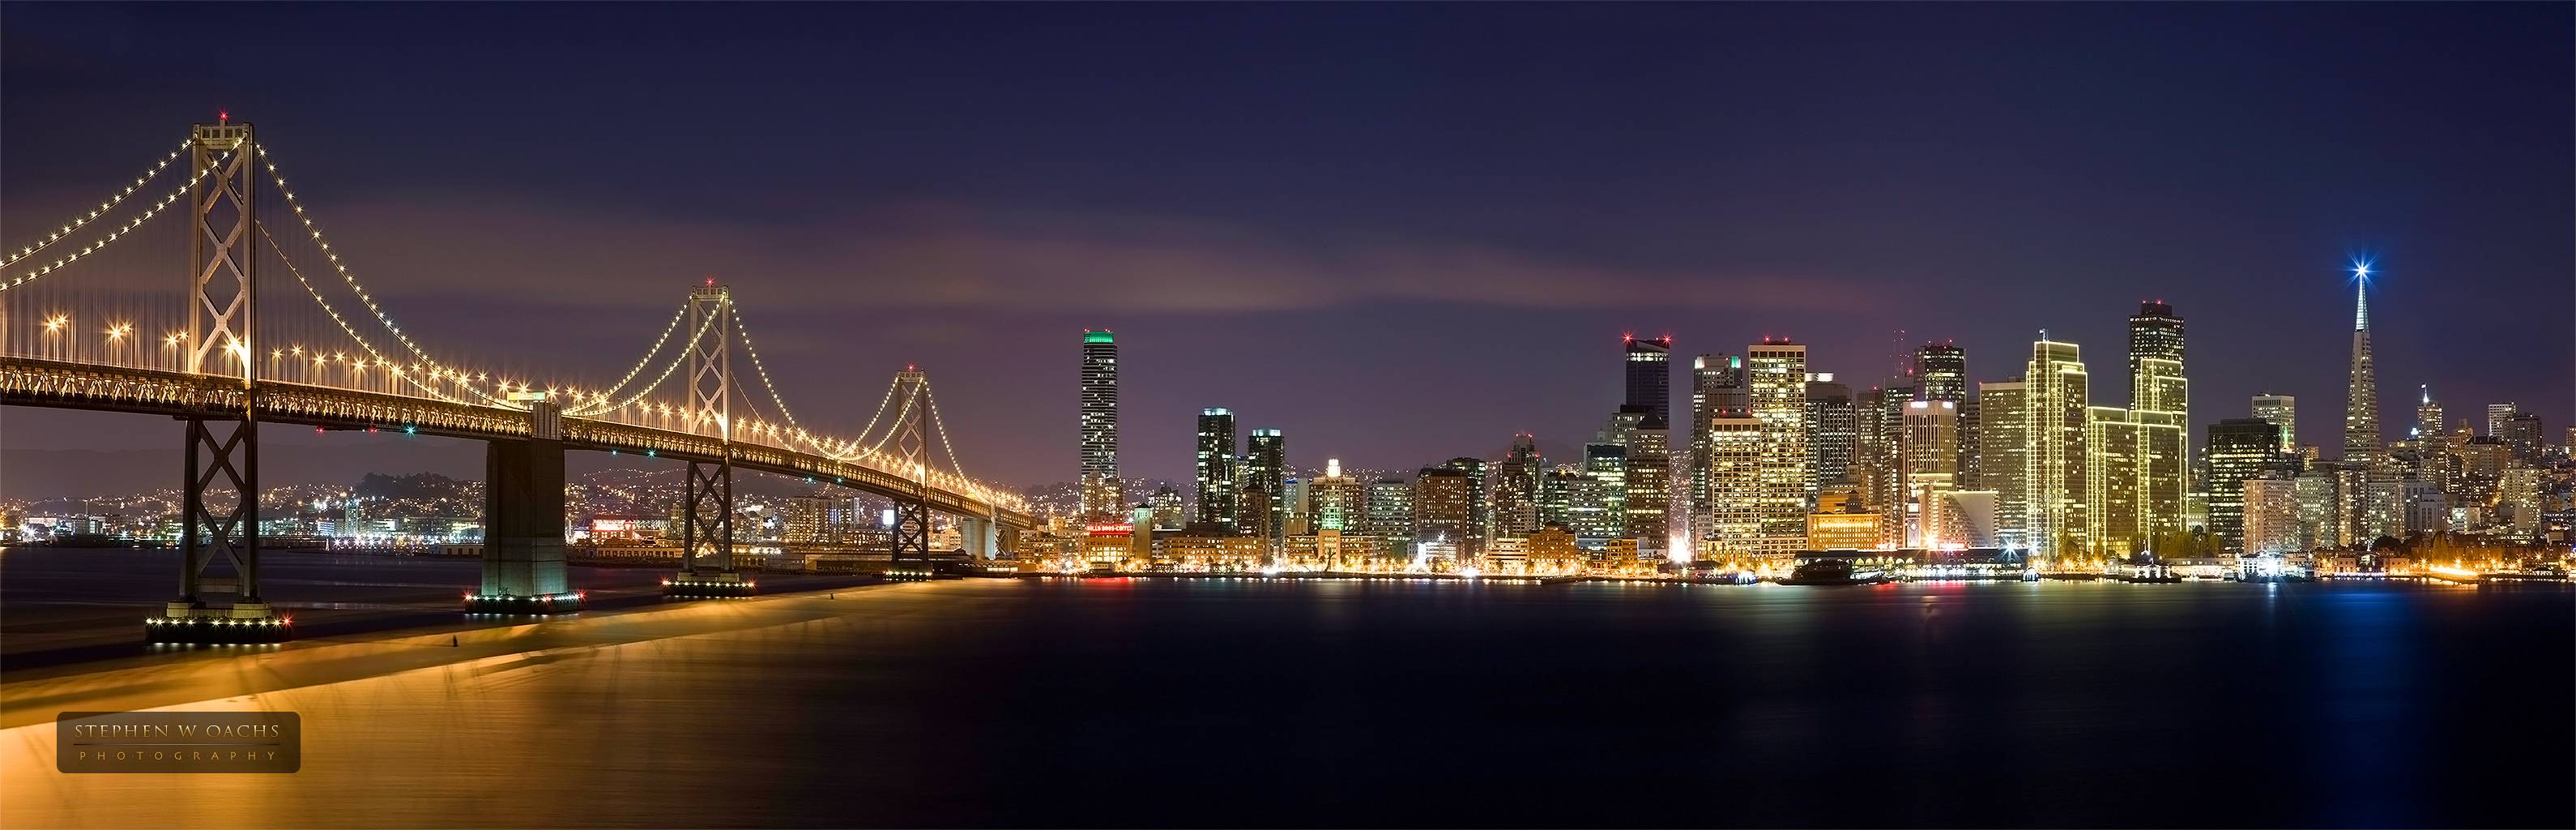 San Francisco Skyline Wallpaper at Night City